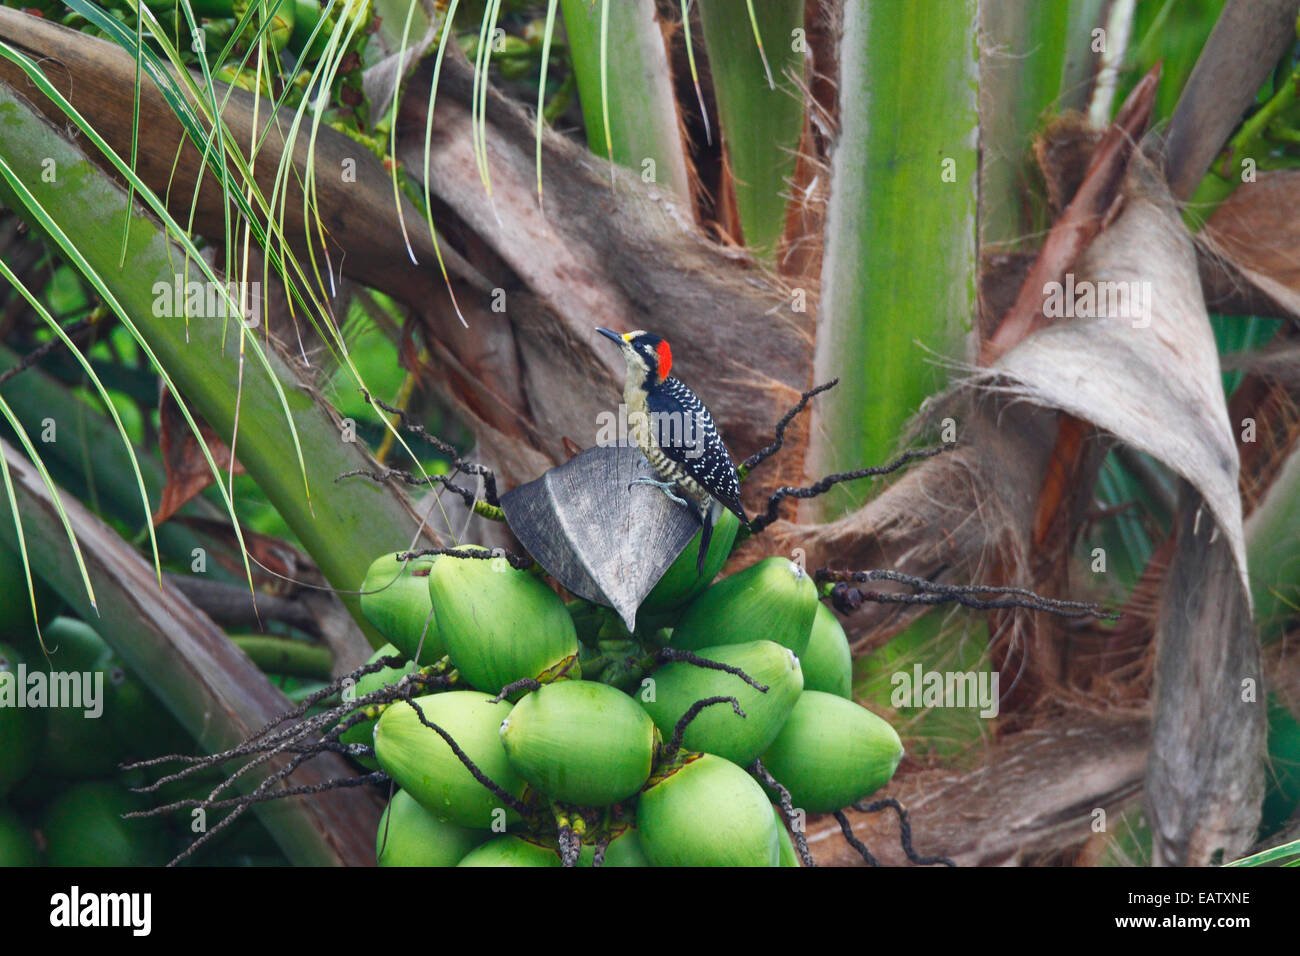 A black-cheeked woodpecker, Melanerpes pucherani foraging among coconuts. Stock Photo